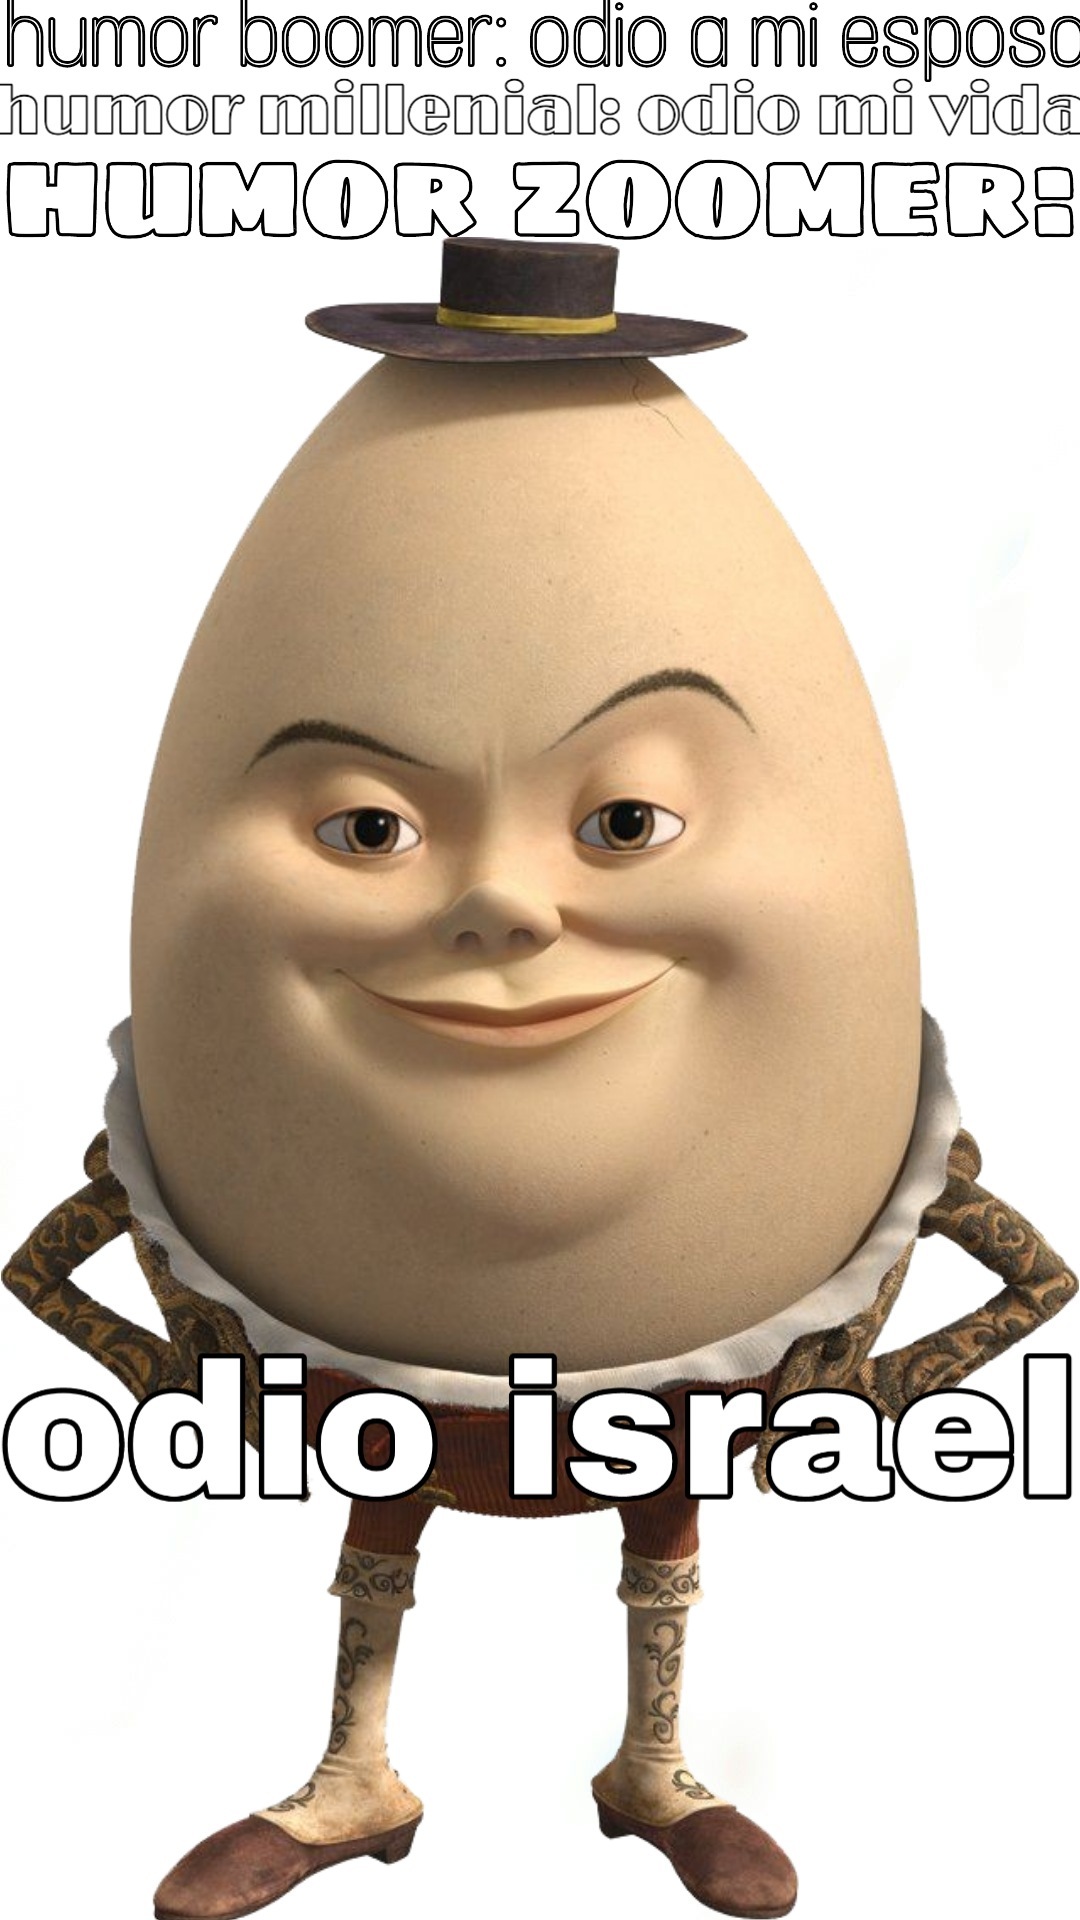 Odio israel - meme